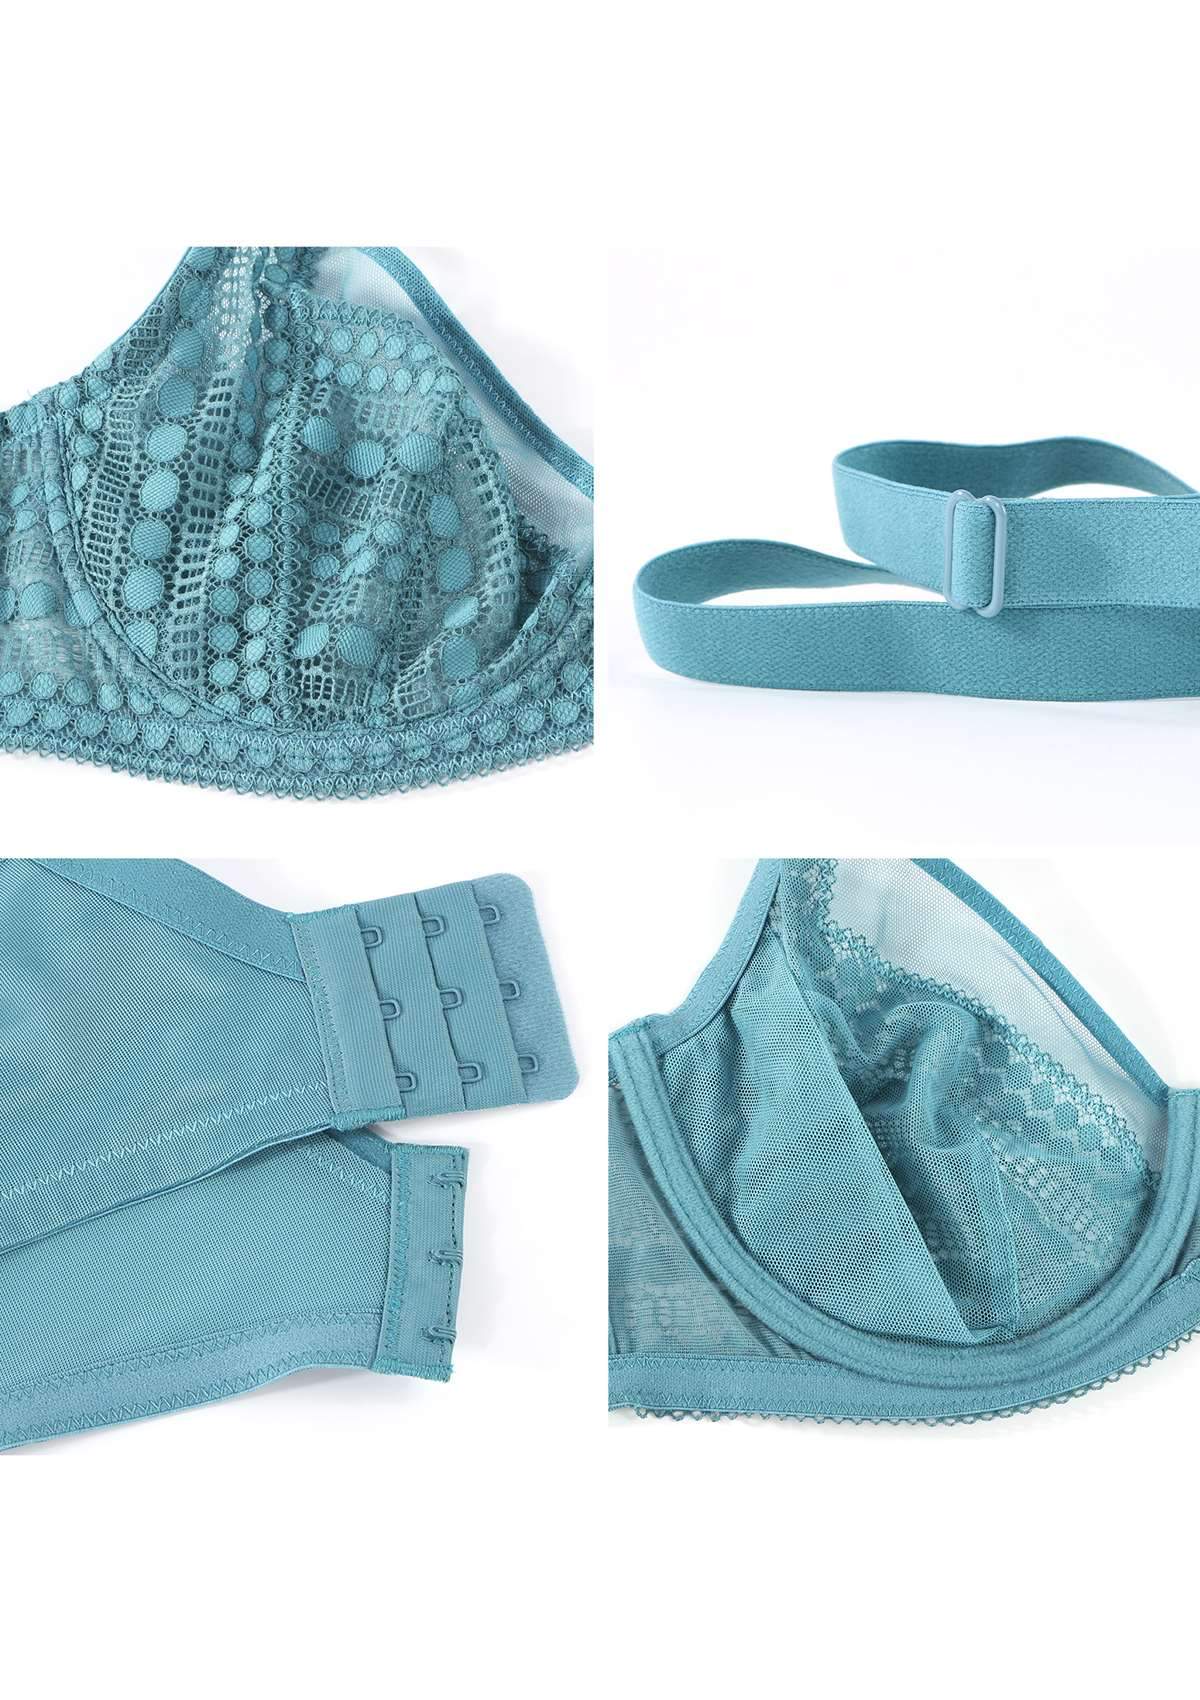 HSIA Heroine Matching Bra And Underwear Set: Bra For Big Boobs - Brittany Blue / 36 / D